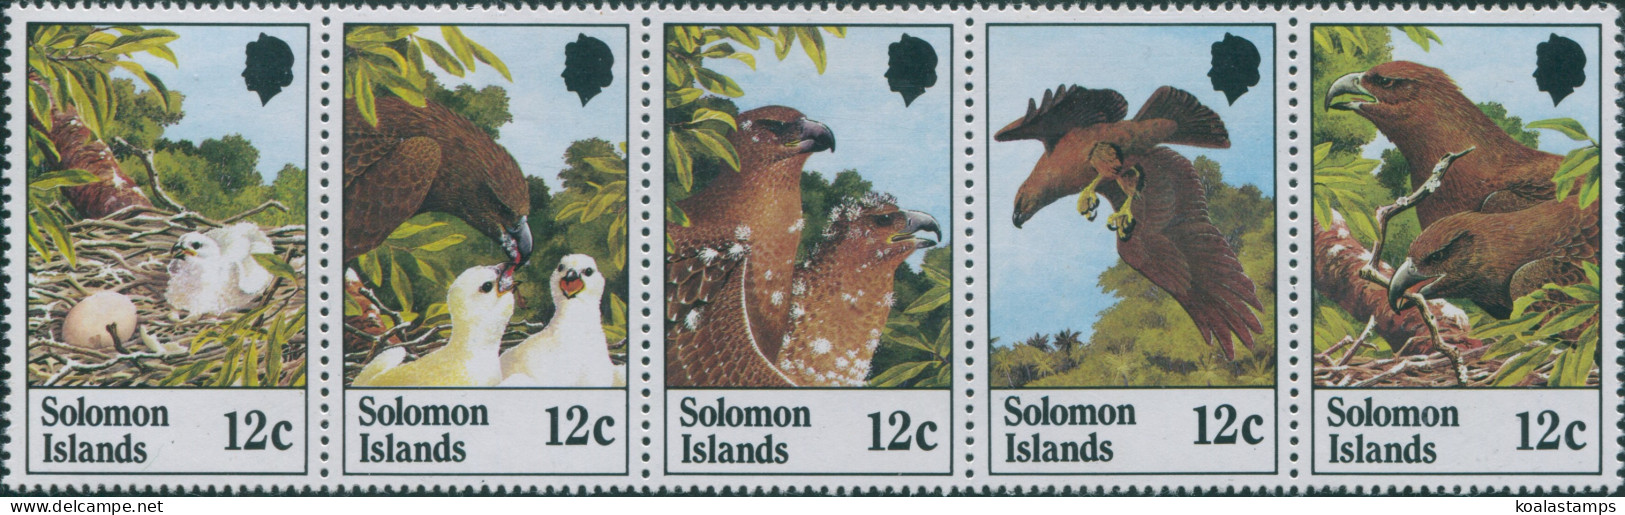 Solomon Islands 1982 SG461a Sanford's Sea Eagle Strip MNH - Solomon Islands (1978-...)